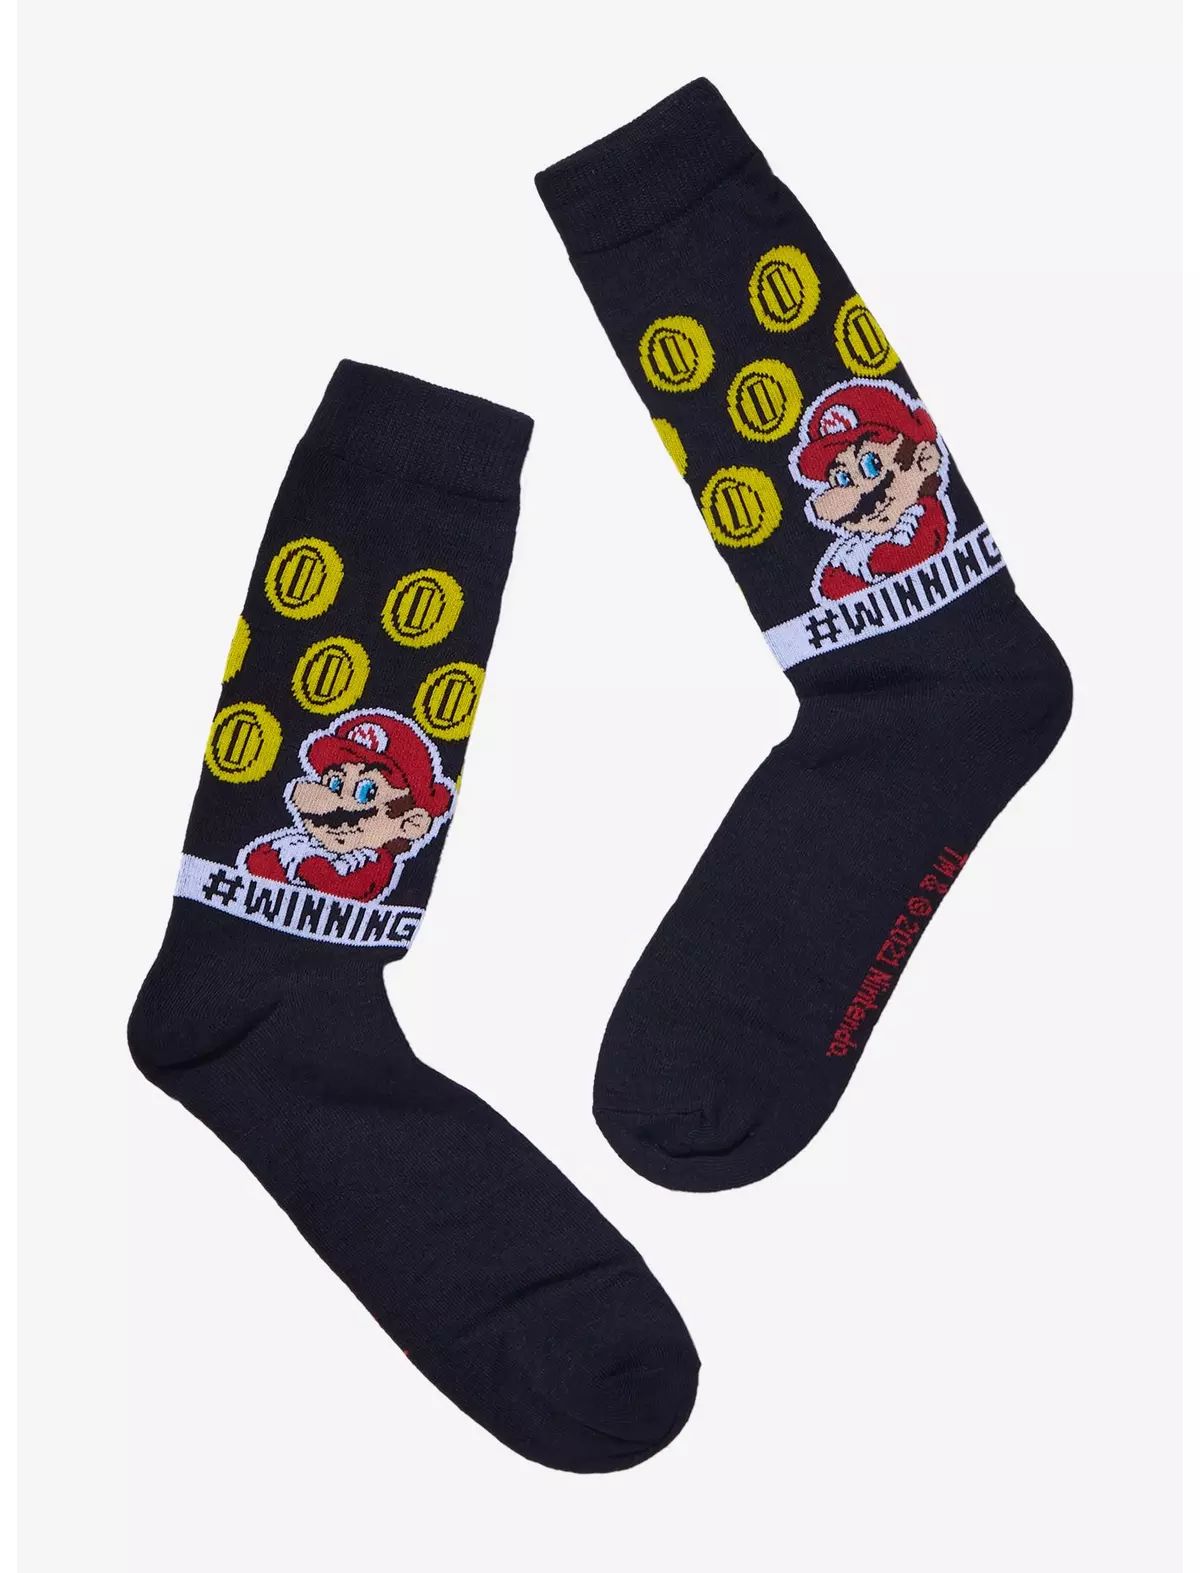 Super Mario Bros. Winning Coins Crew Socks | Hot Topic